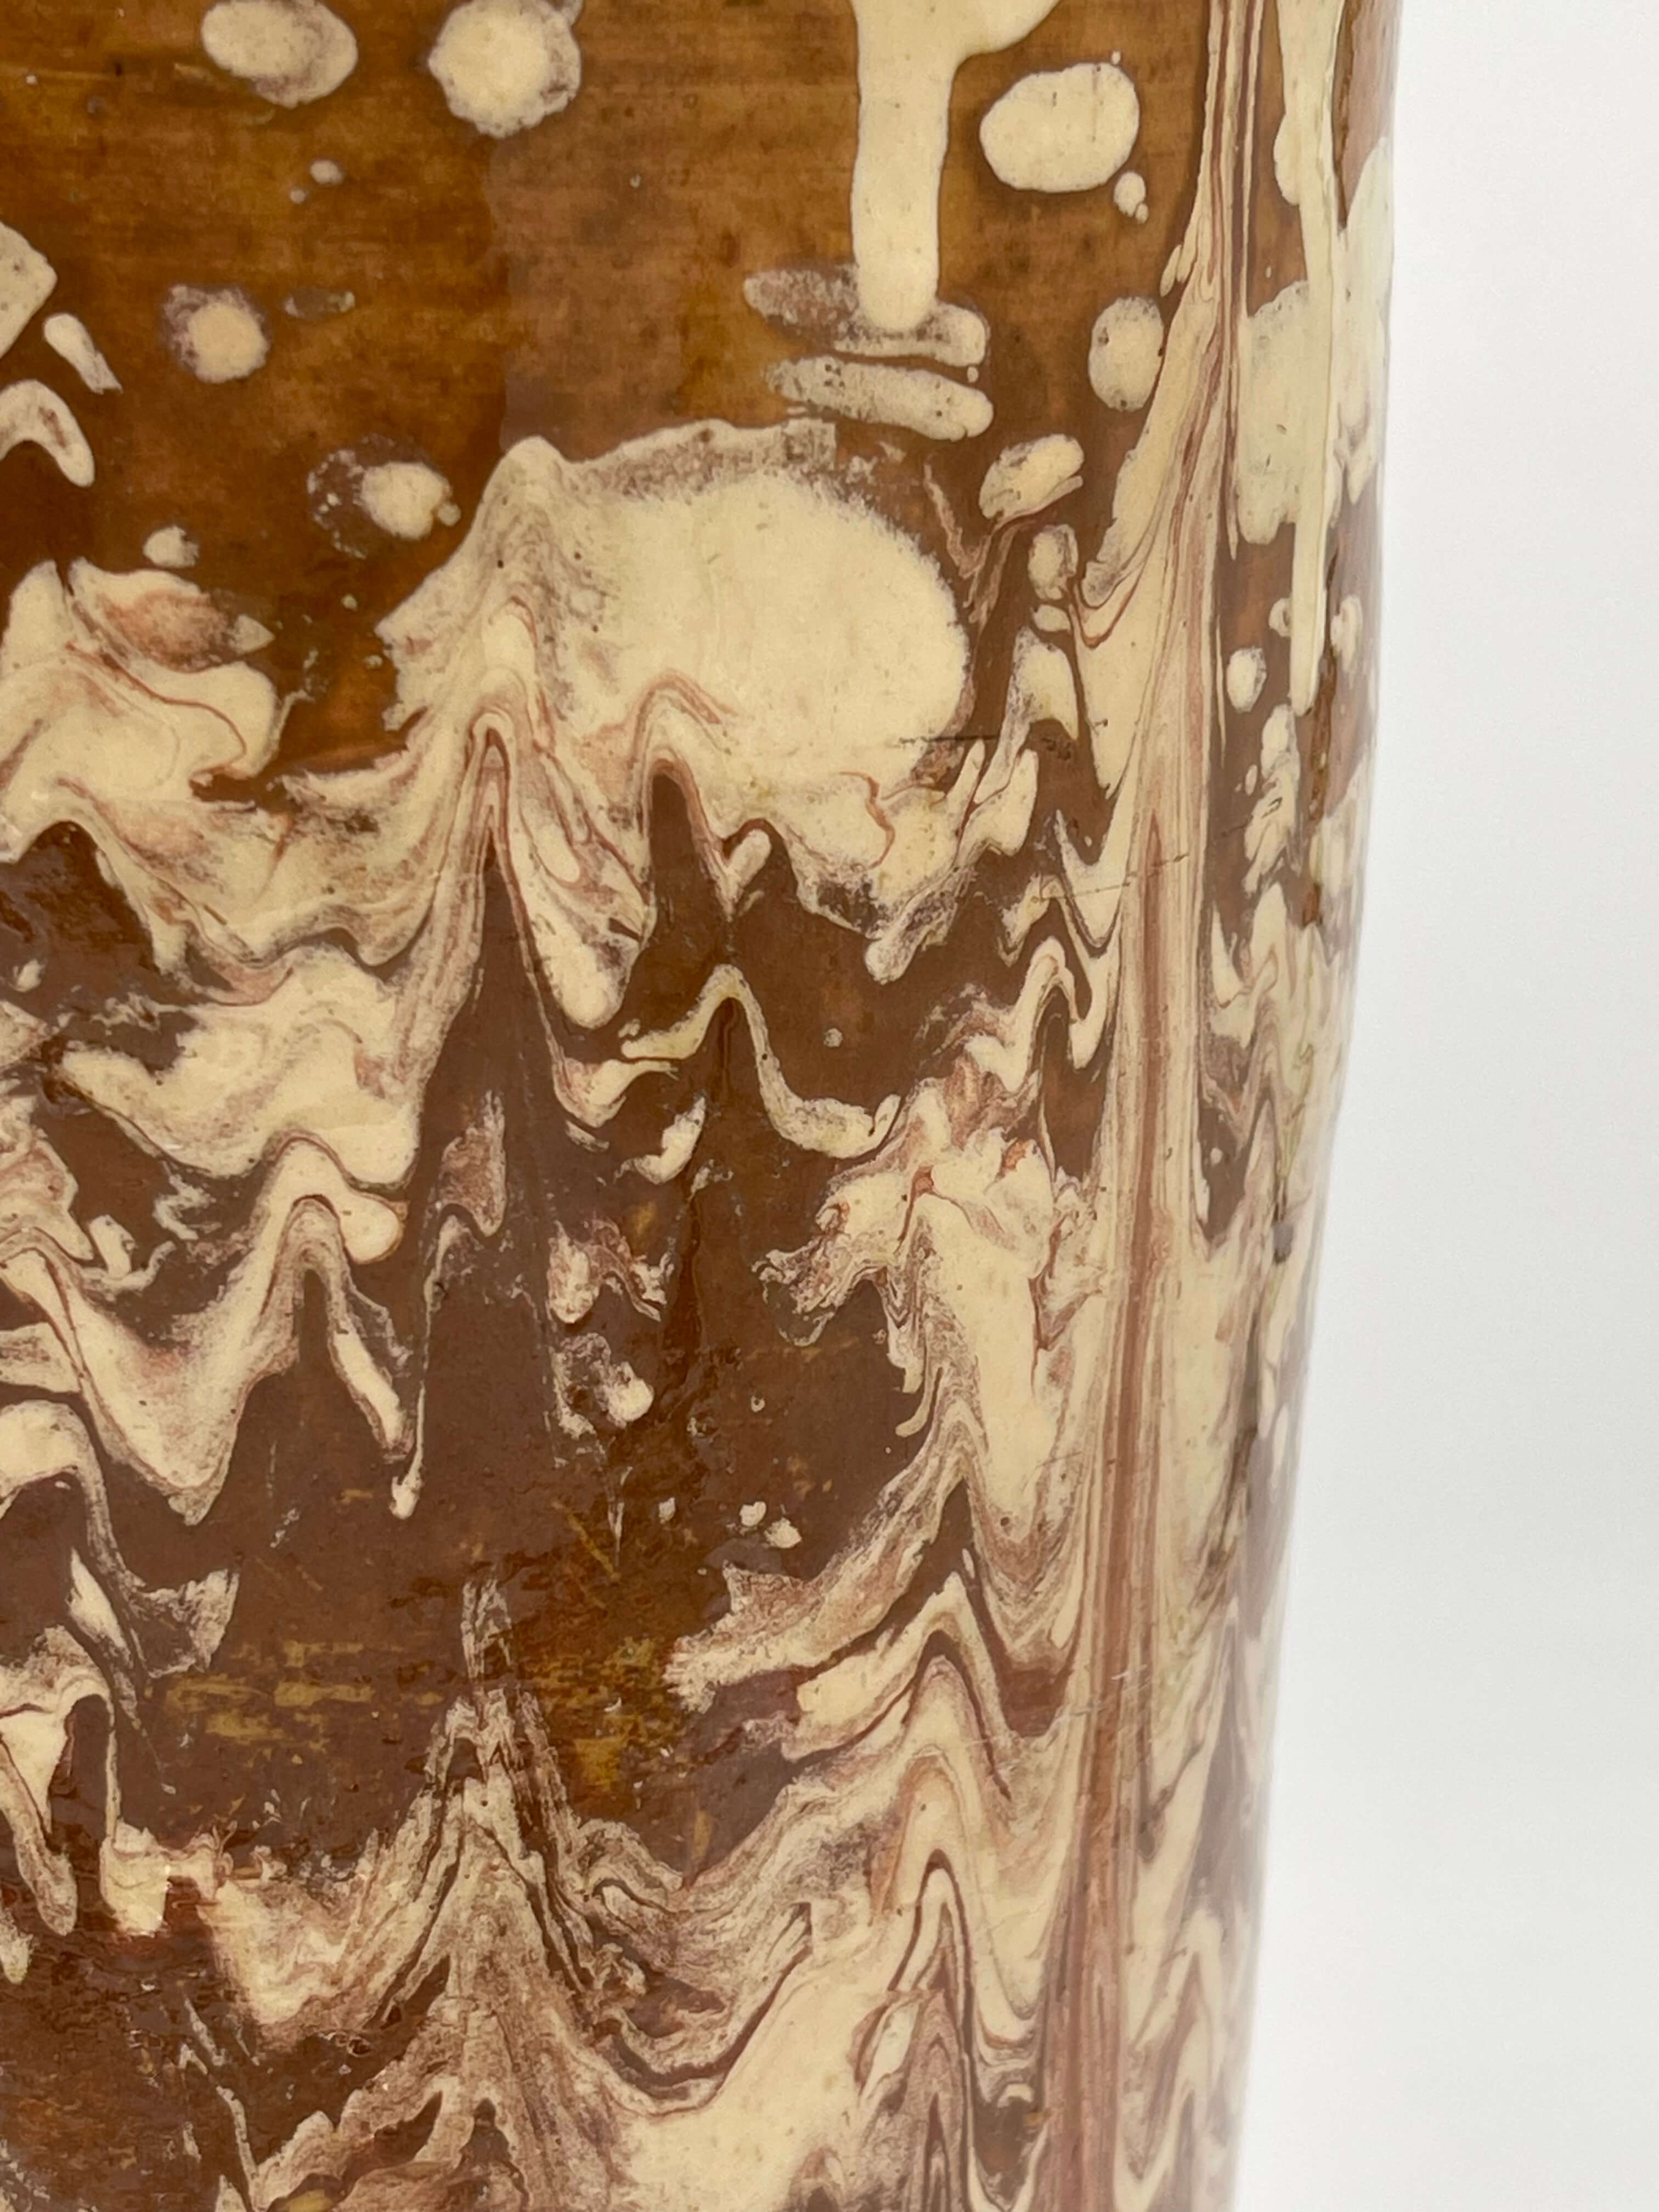 200+ year old ceramic vase with swirl/splatter glaze